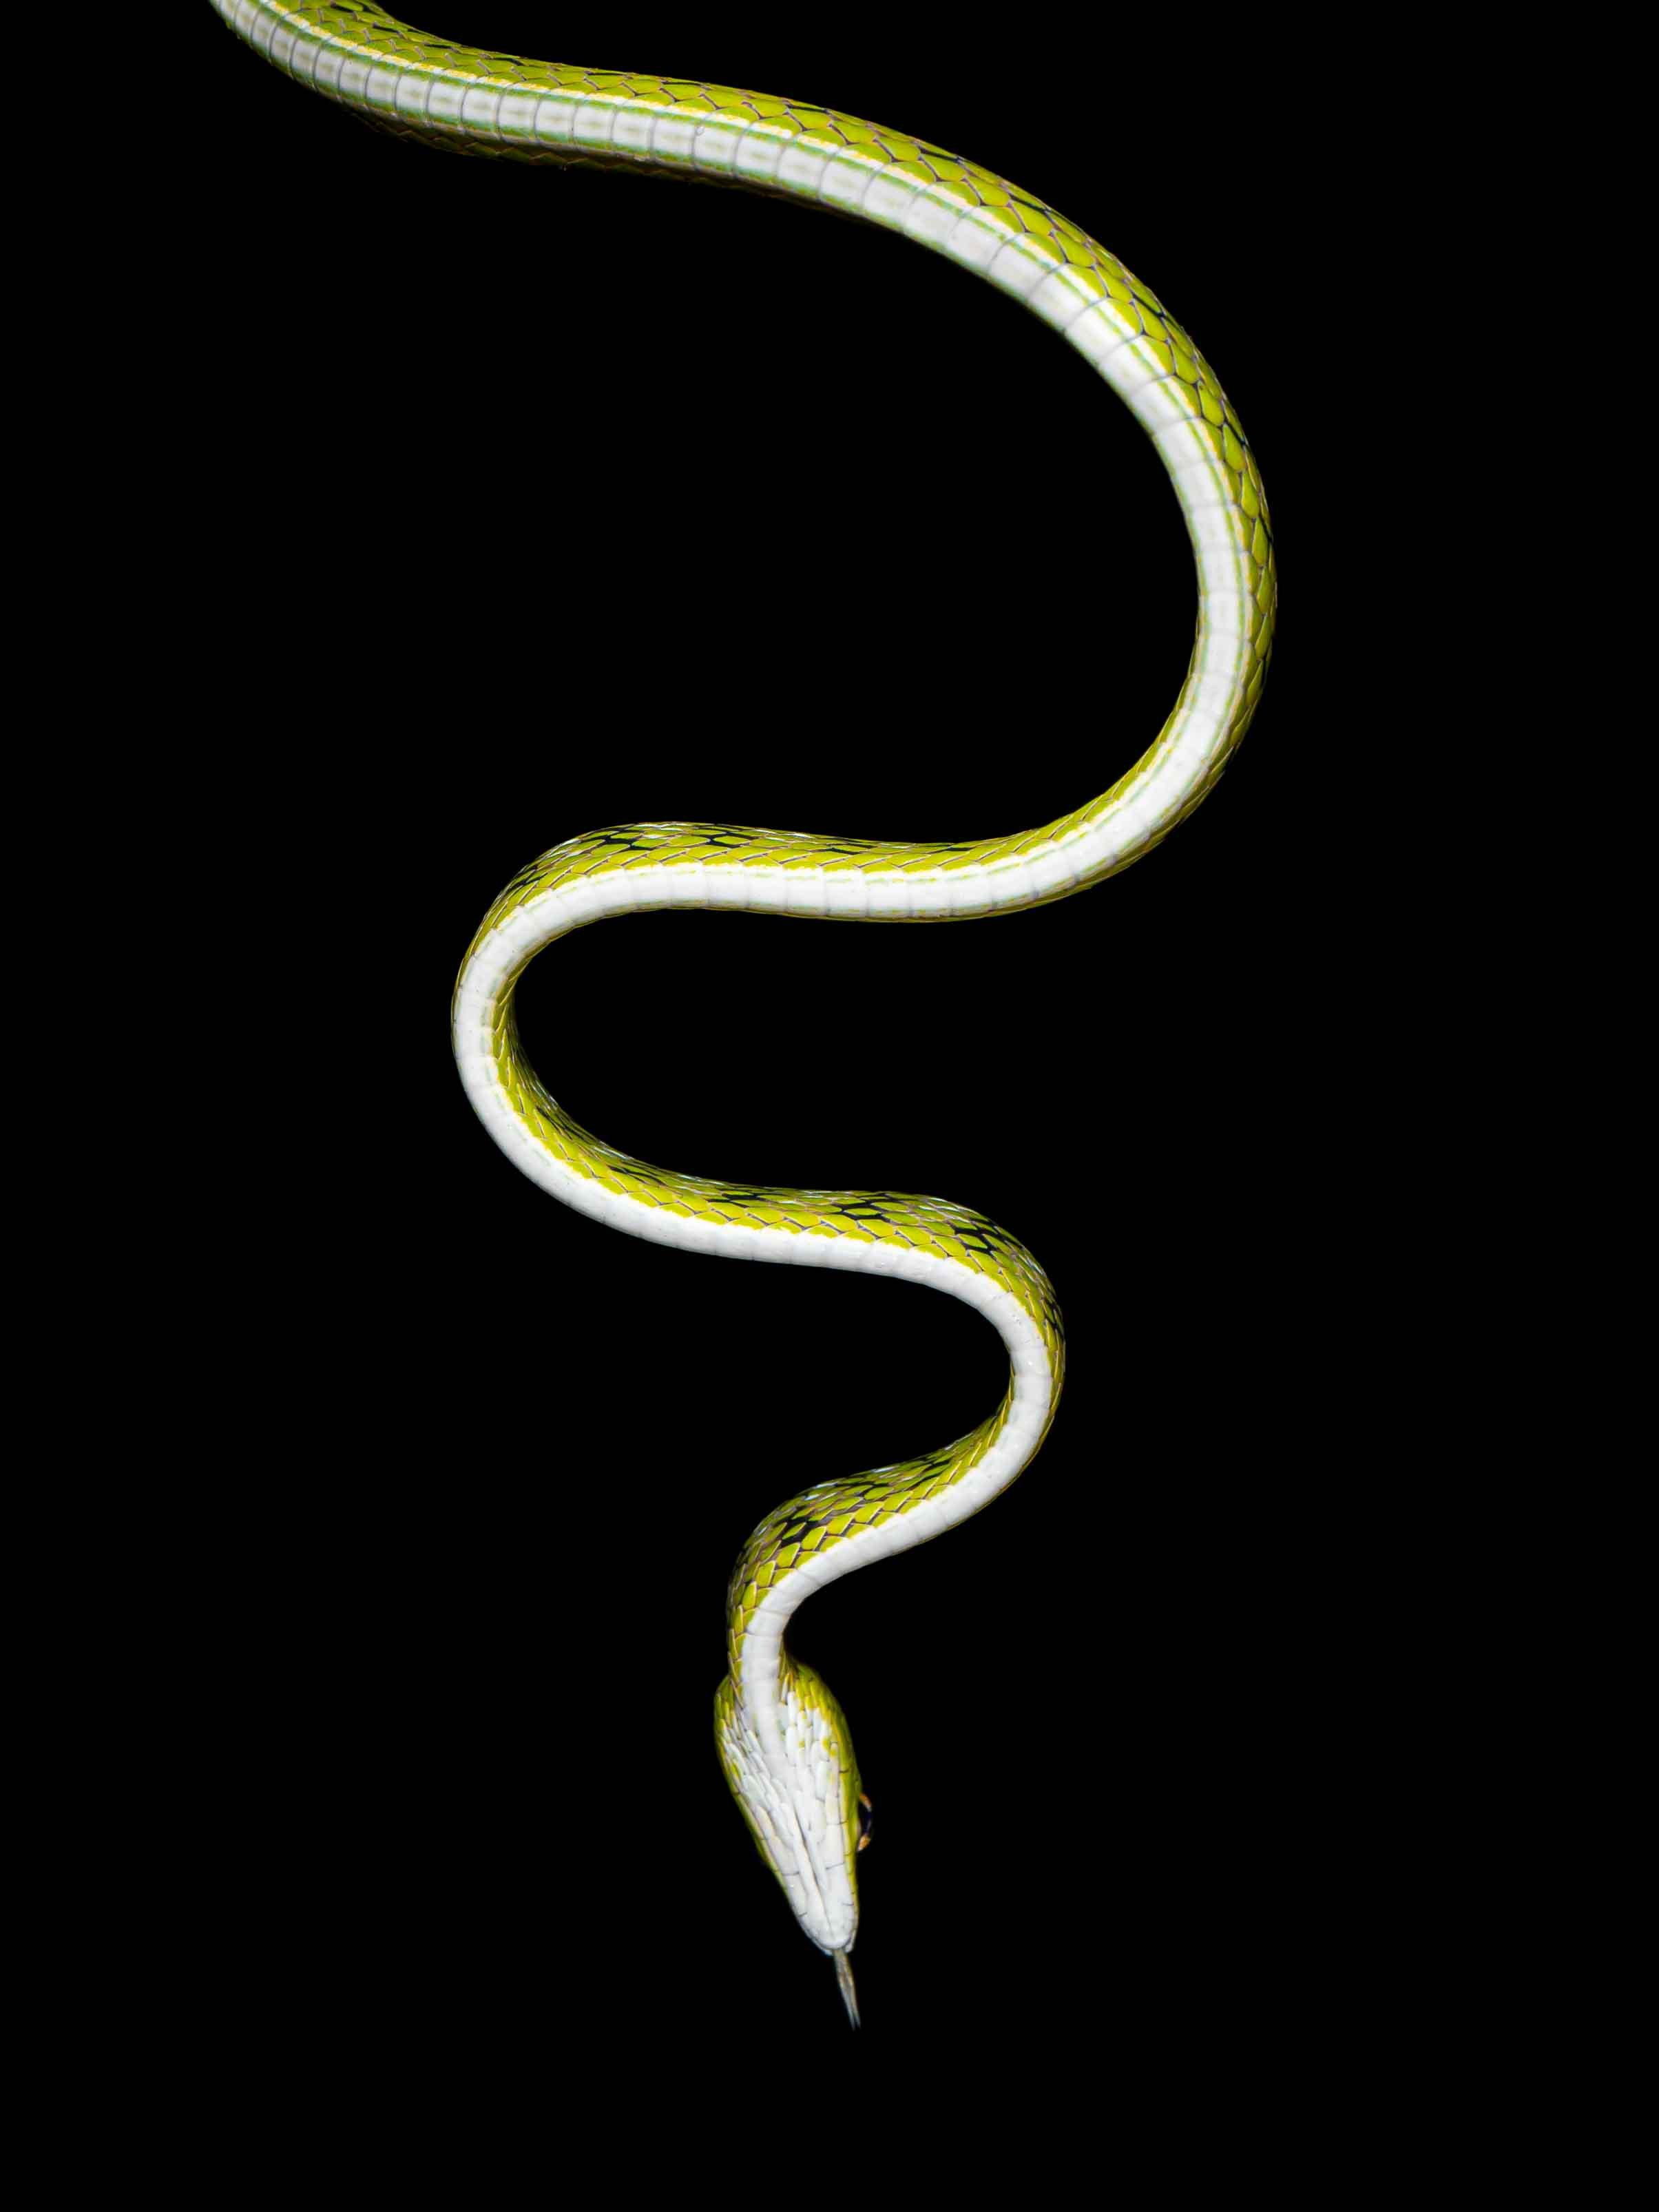 Malayan whipsnake - Ahaetulla mycterizans